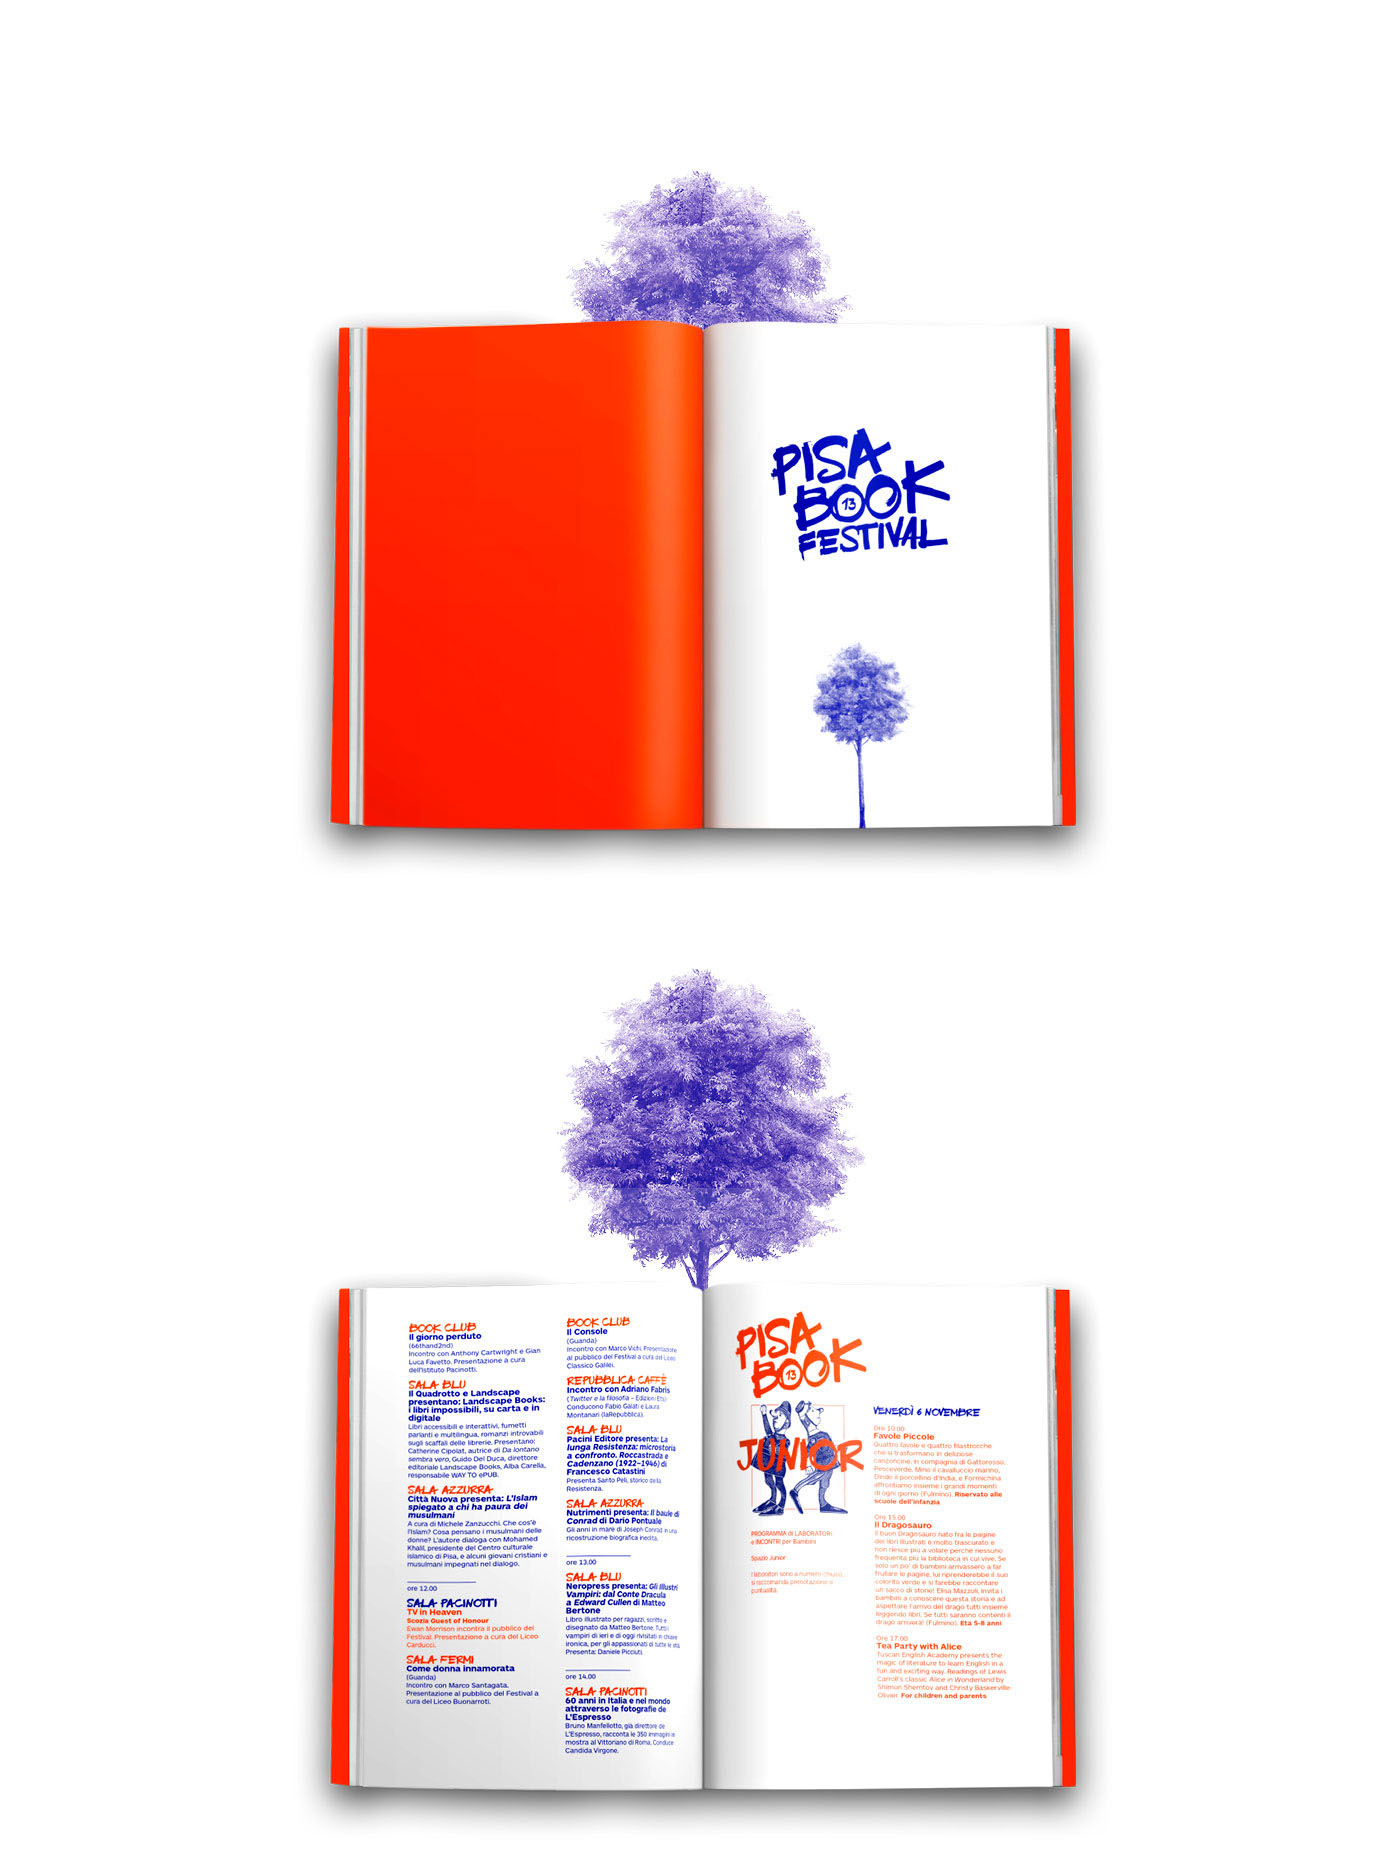 festival Italy pantone orange blue White striking book poster Duotone font brush Tree  Young